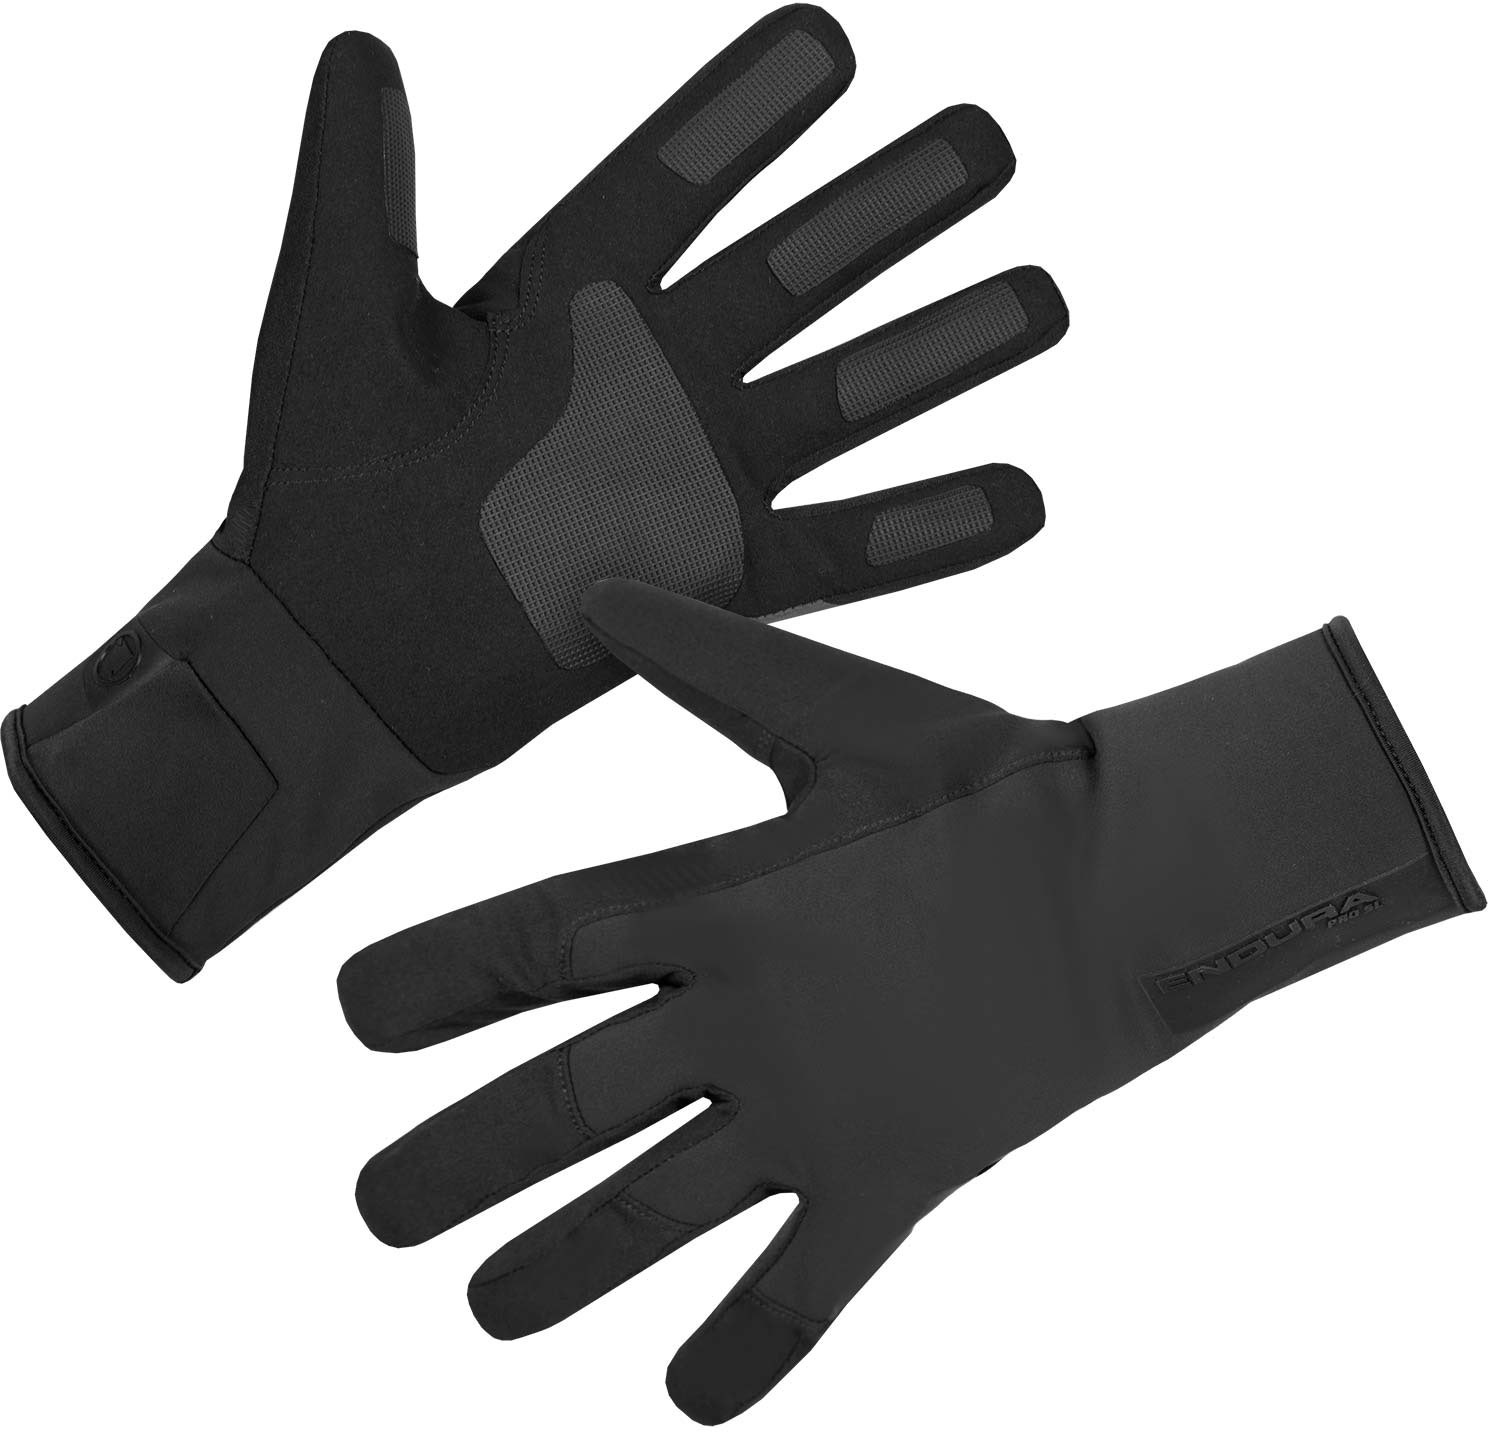  - Endura Pro SL Primaloft Waterproof Glove - Sort